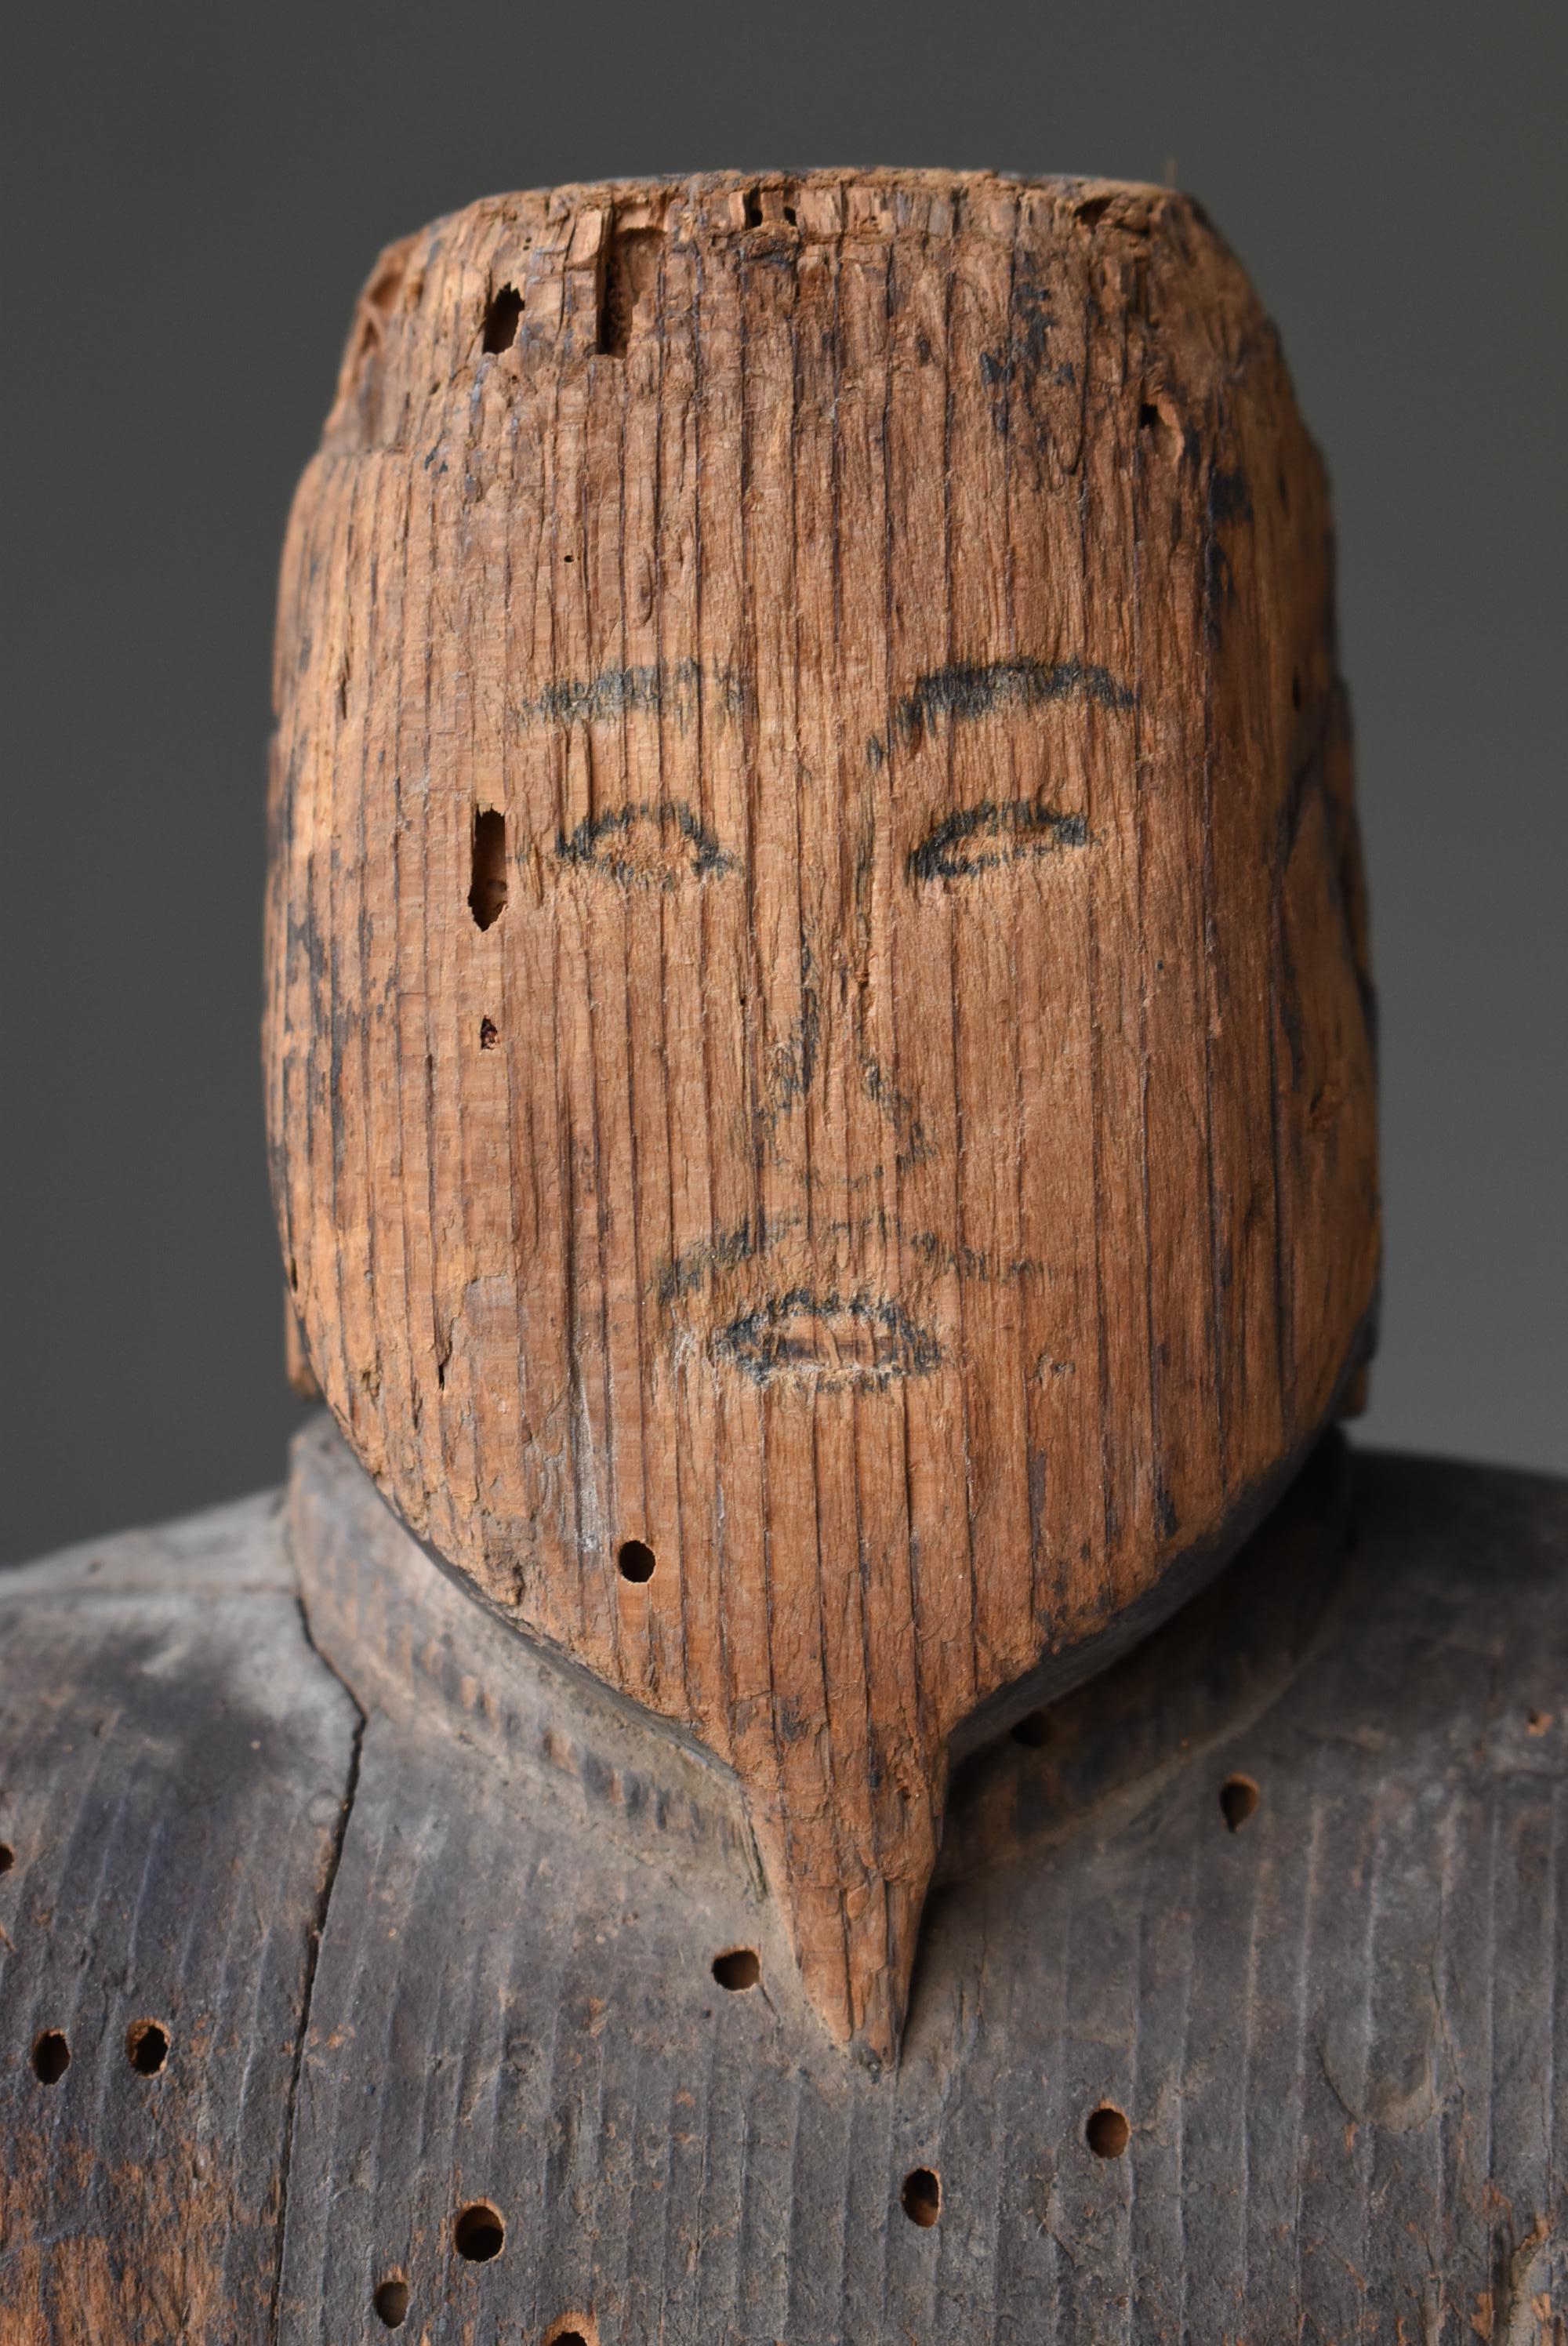 18th Century Japanese Antique Wood Carving God 1700s-1800s / Figurine Buddha Object Wabi Sabi